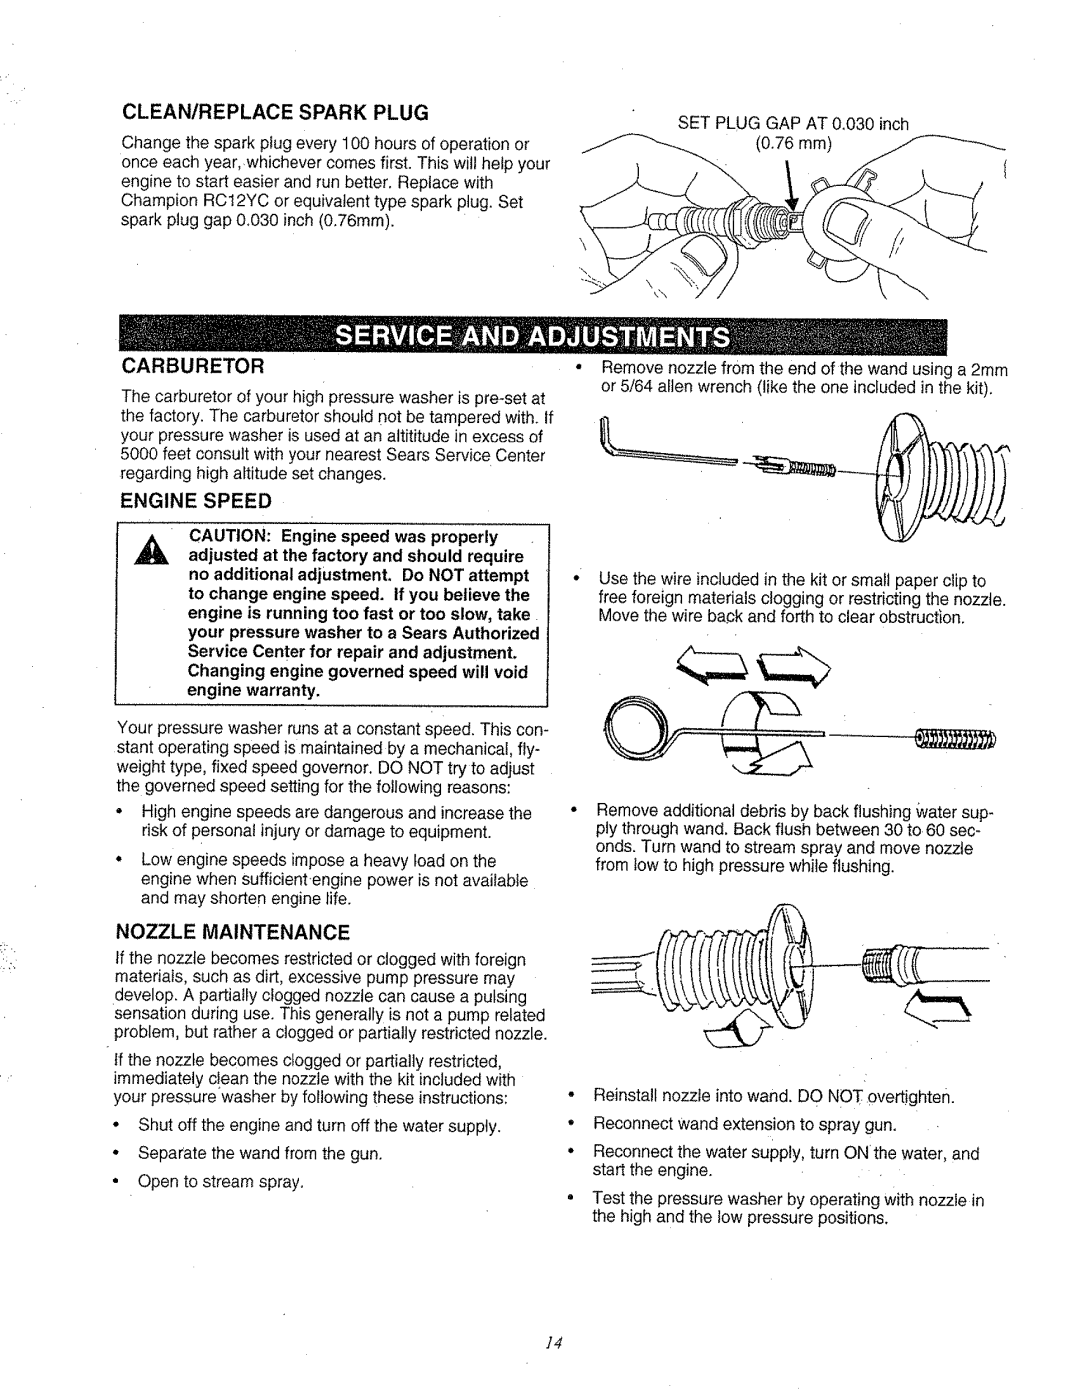 Craftsman 580.763 owner manual Clean/Replace Spark Plug, Carburetor, Nozzle Maintenance 